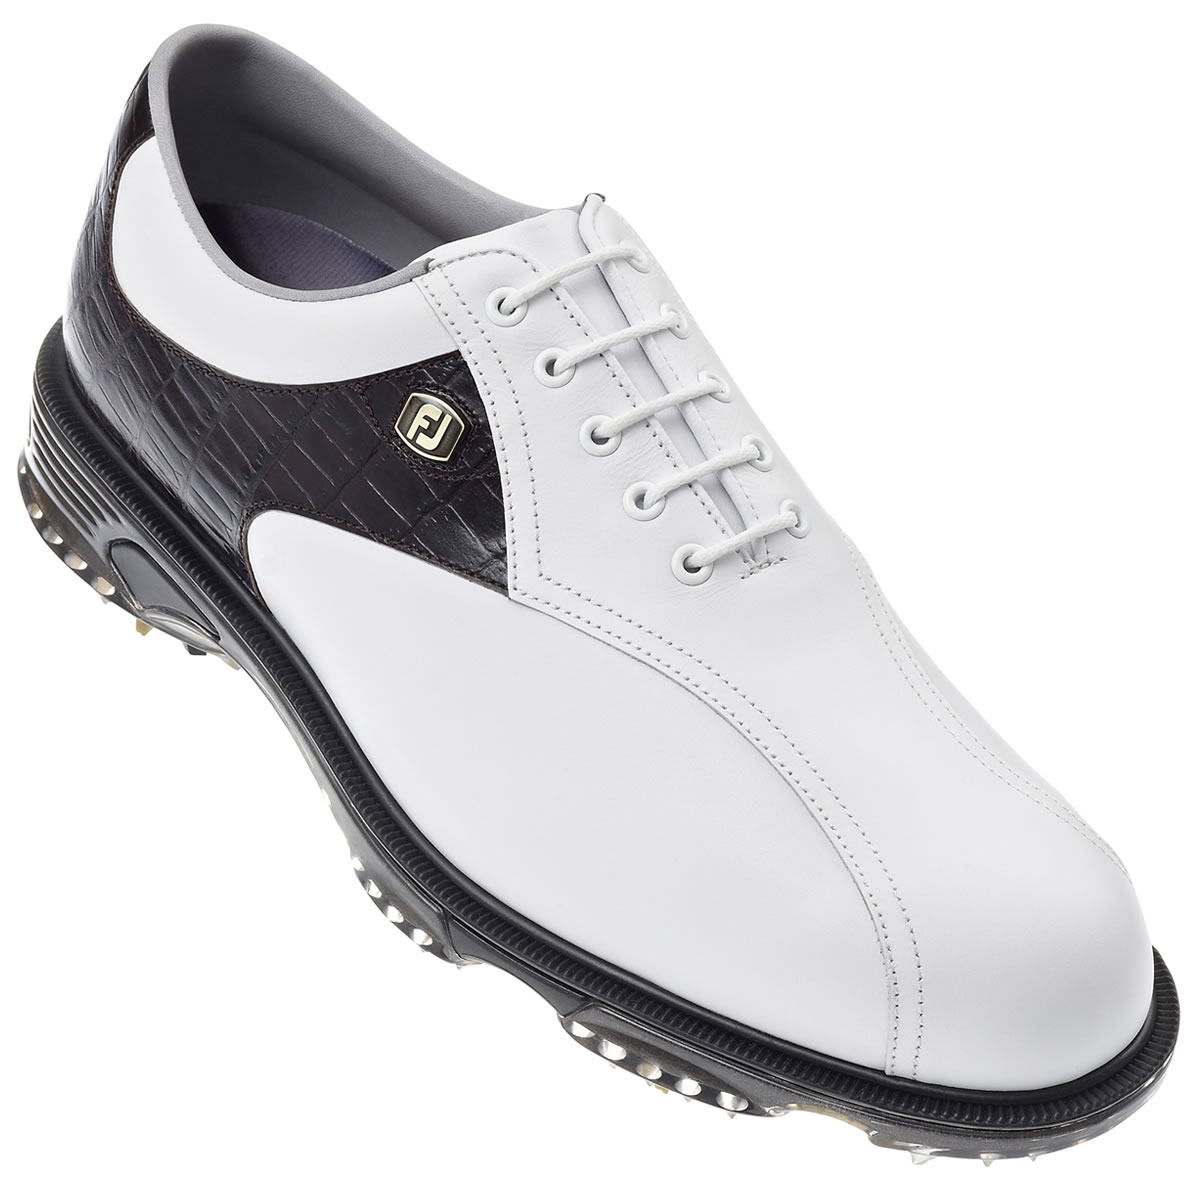 DryJoys Tour Golf Shoes White/Brown Croc